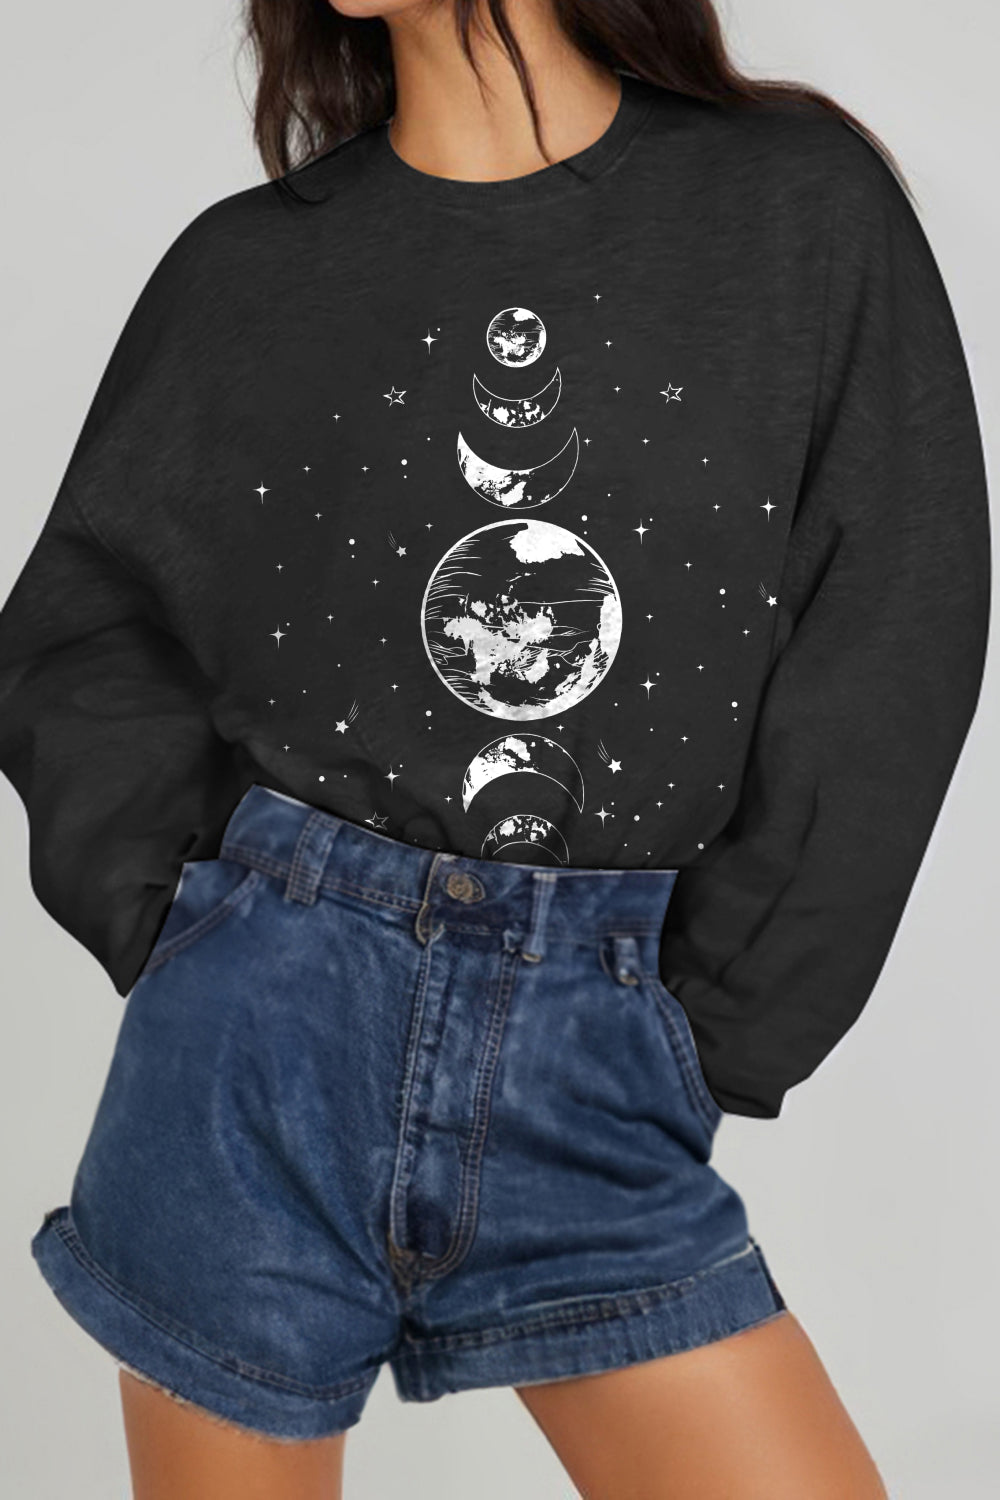 POSHOOT AUTUMN OUTFITS      Full Size Earth & Moon Graphic Sweatshirt